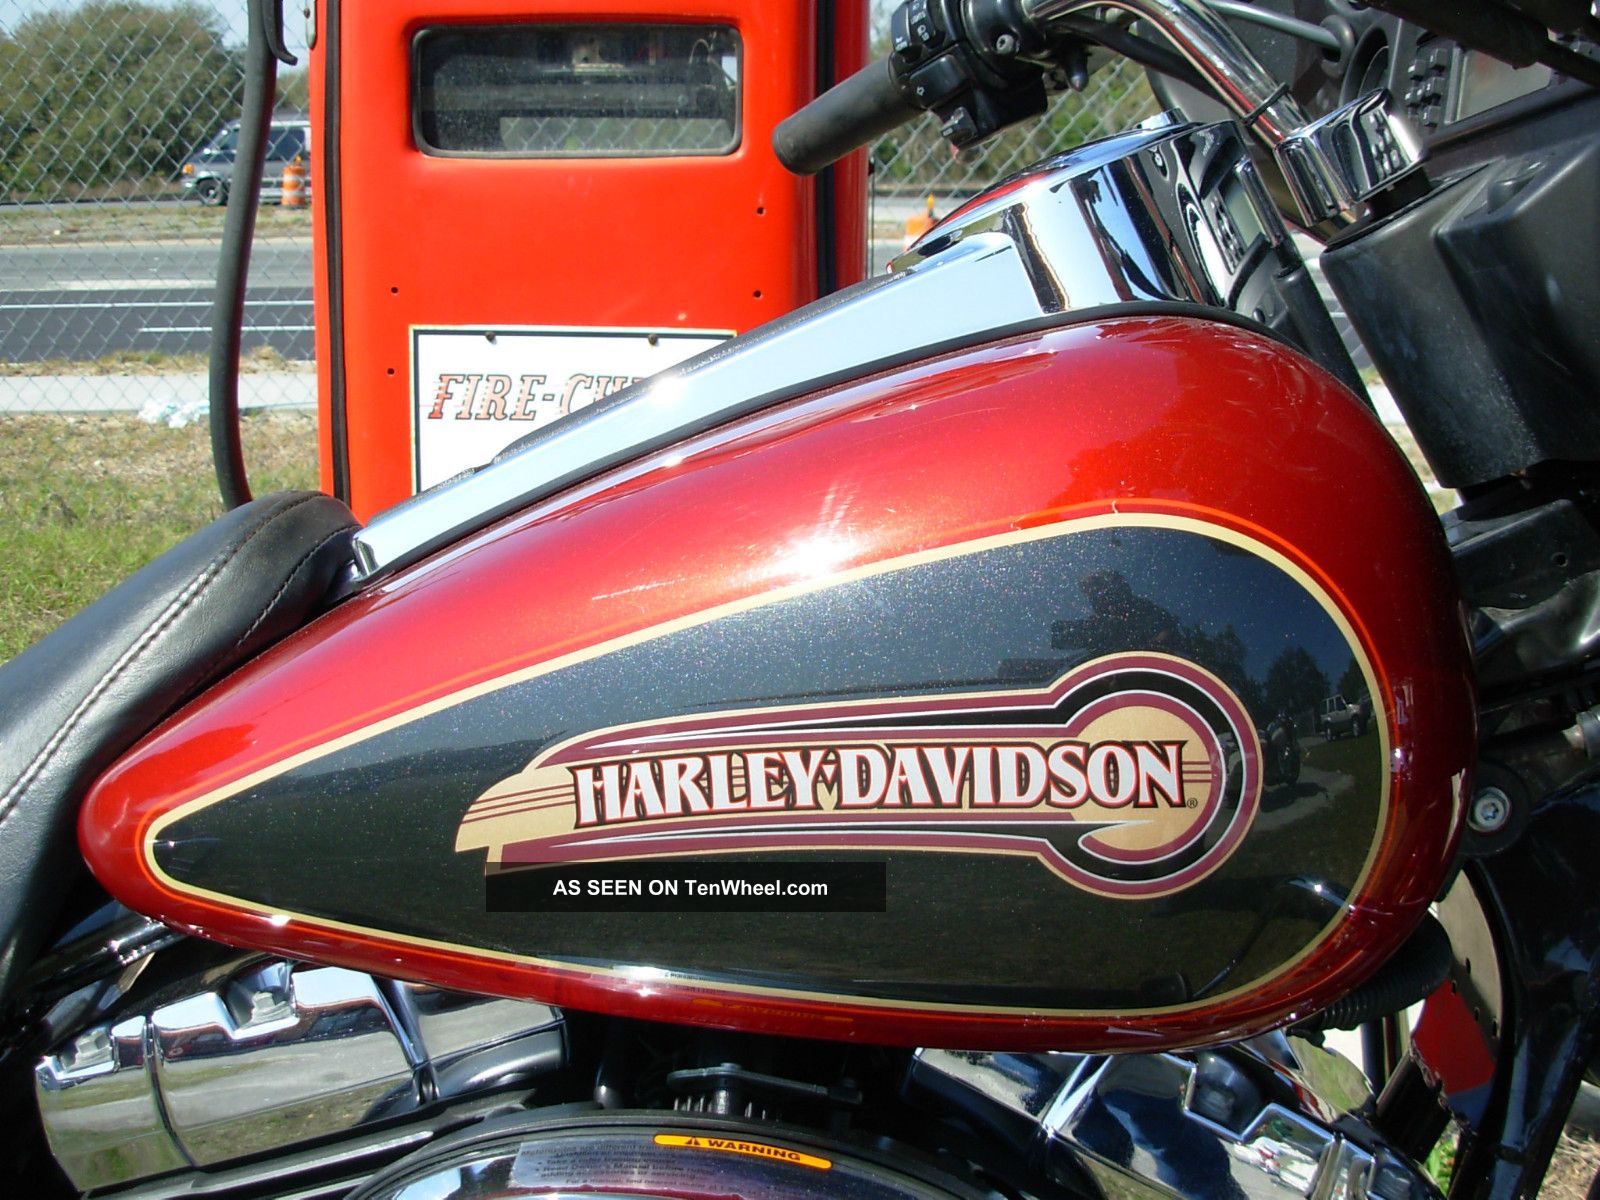 2007 Flhtc, Harley Davidson Electra Glide Classic